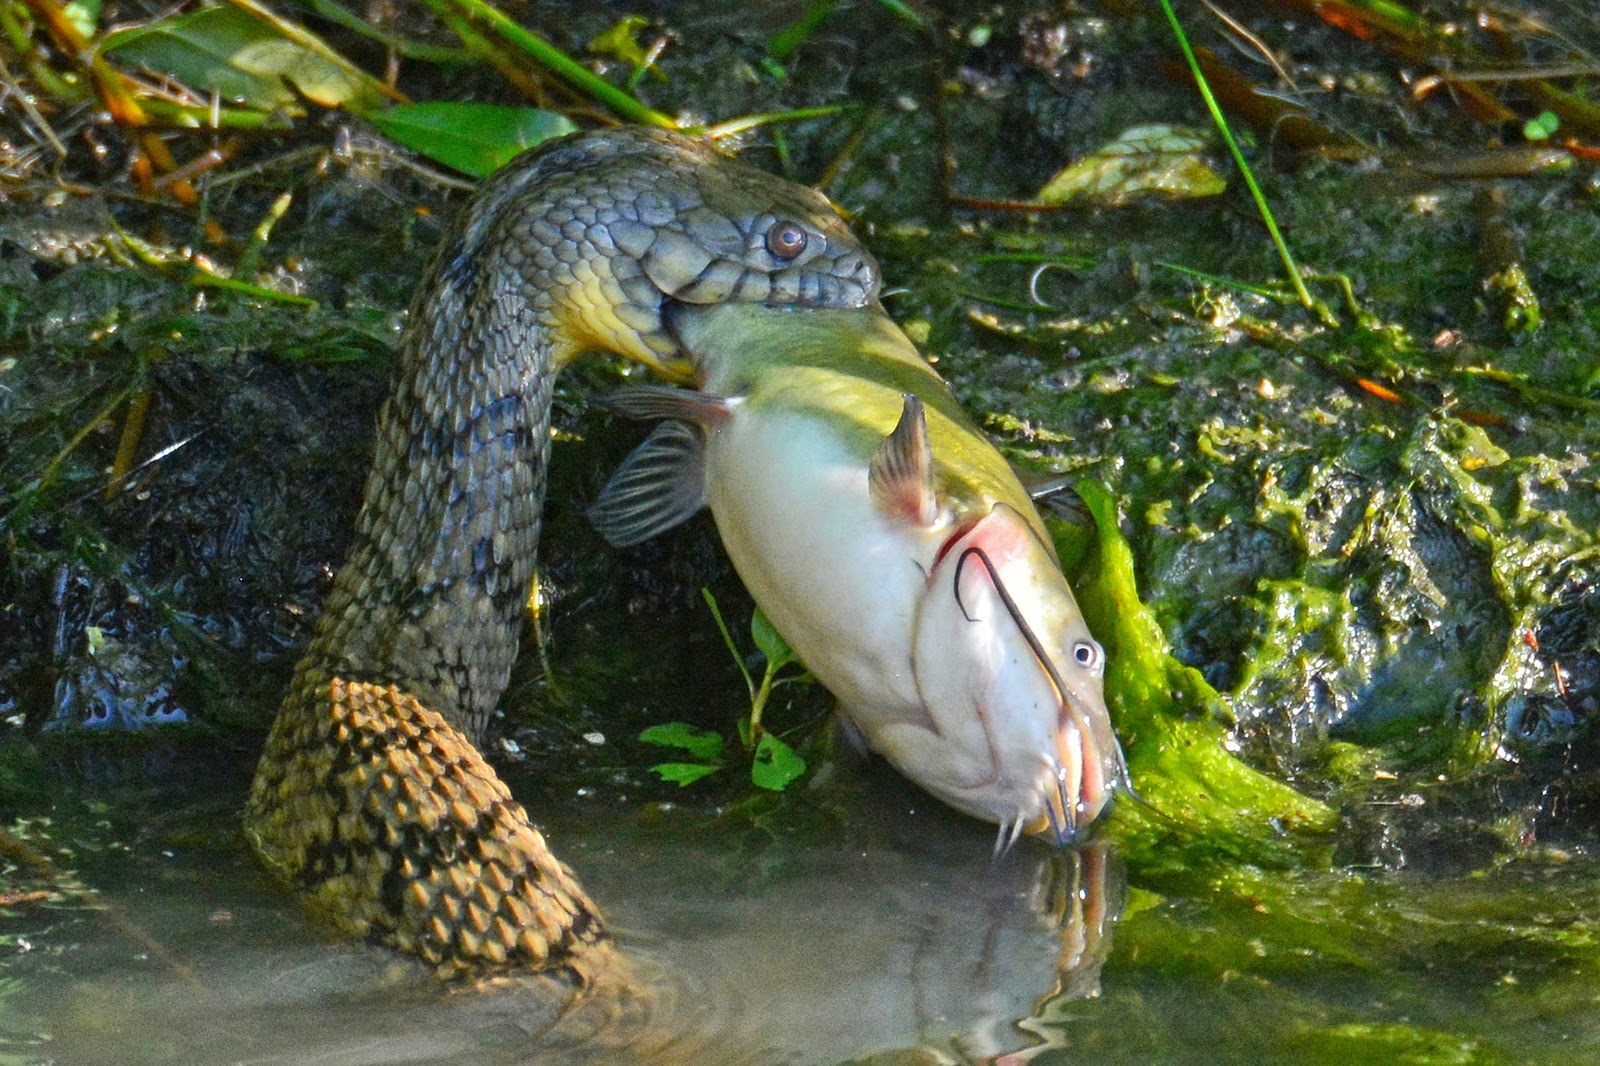 A bullhead catfish caught by a diamondback water snake